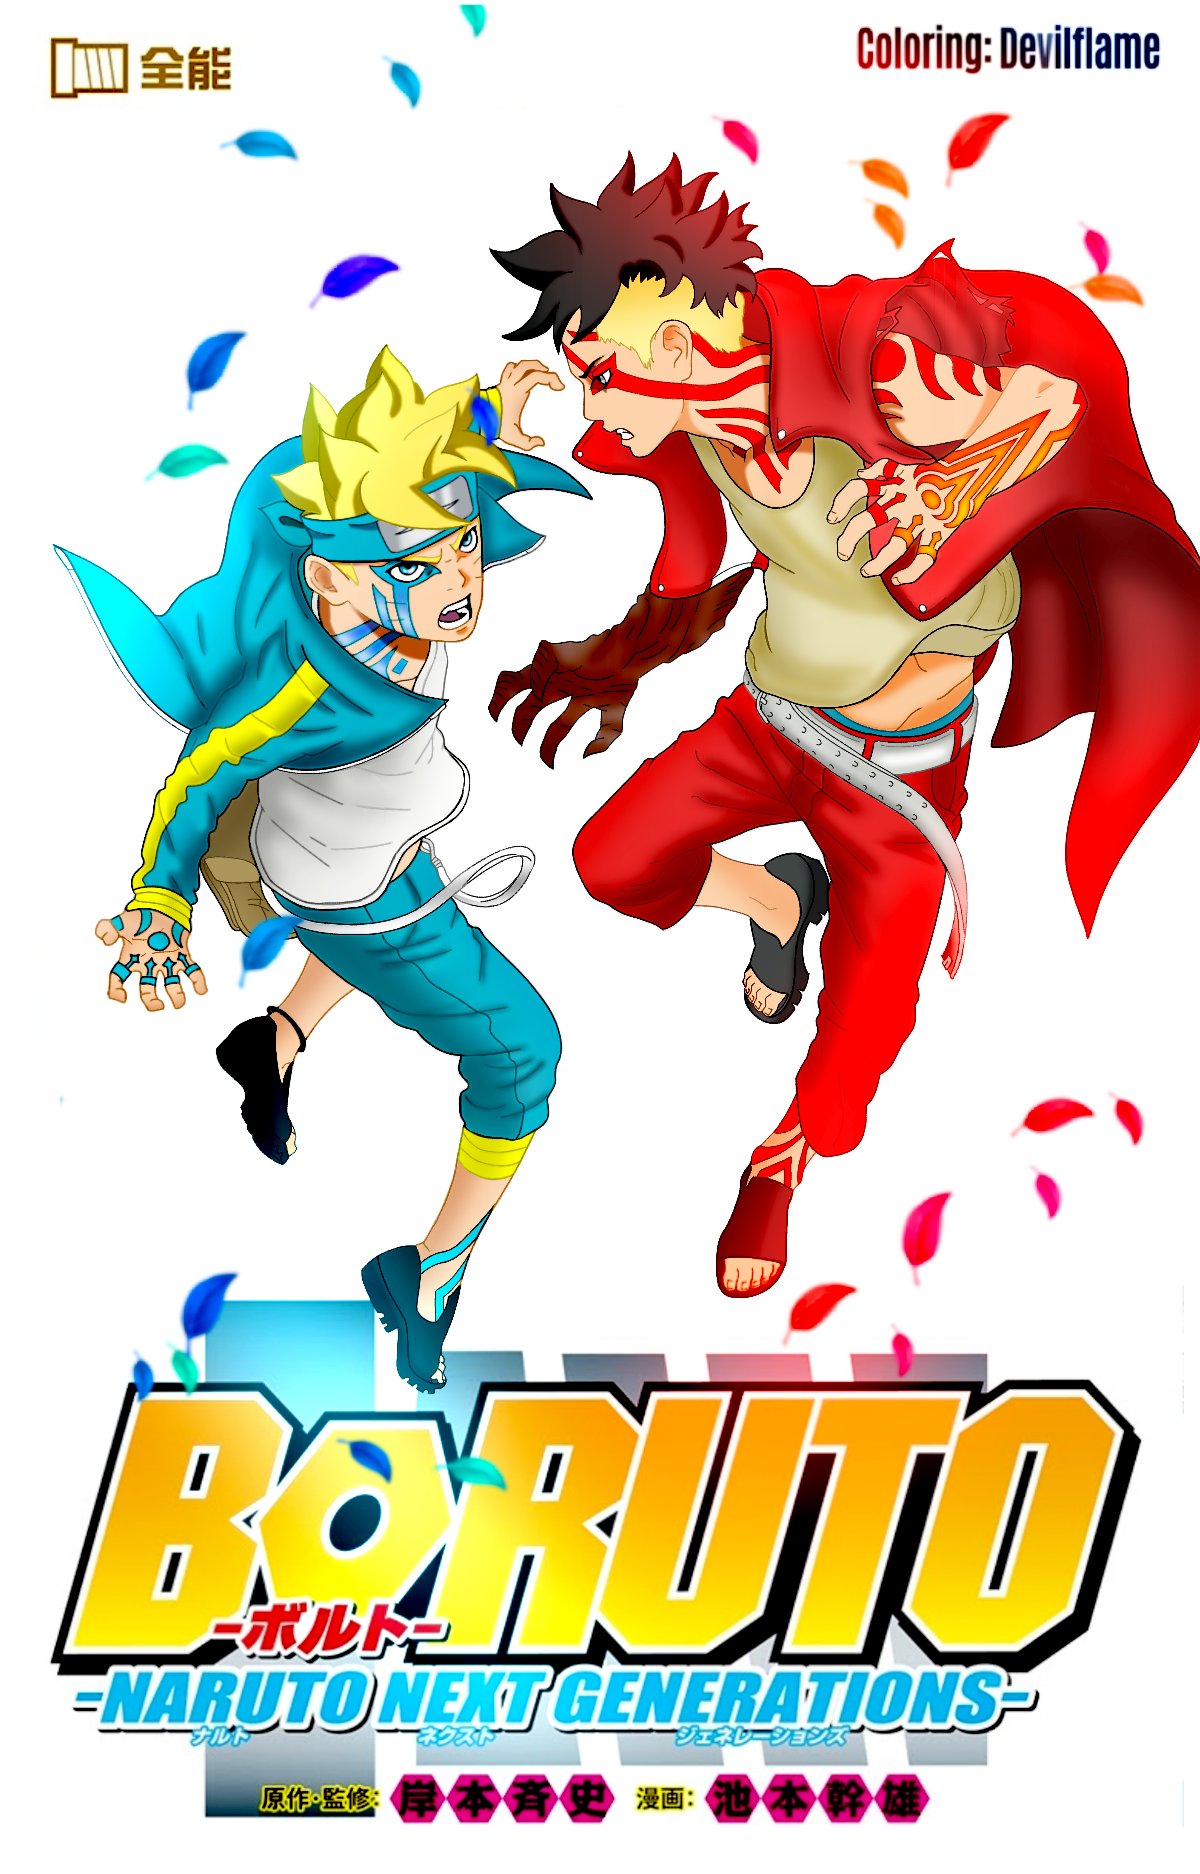 ♦️Devilflame♦️ on X: Boruto Volume 20 Cover Page coloring by me‼️😁 #boruto  vs #Kawaki 🍃🍃🍁🍂  / X